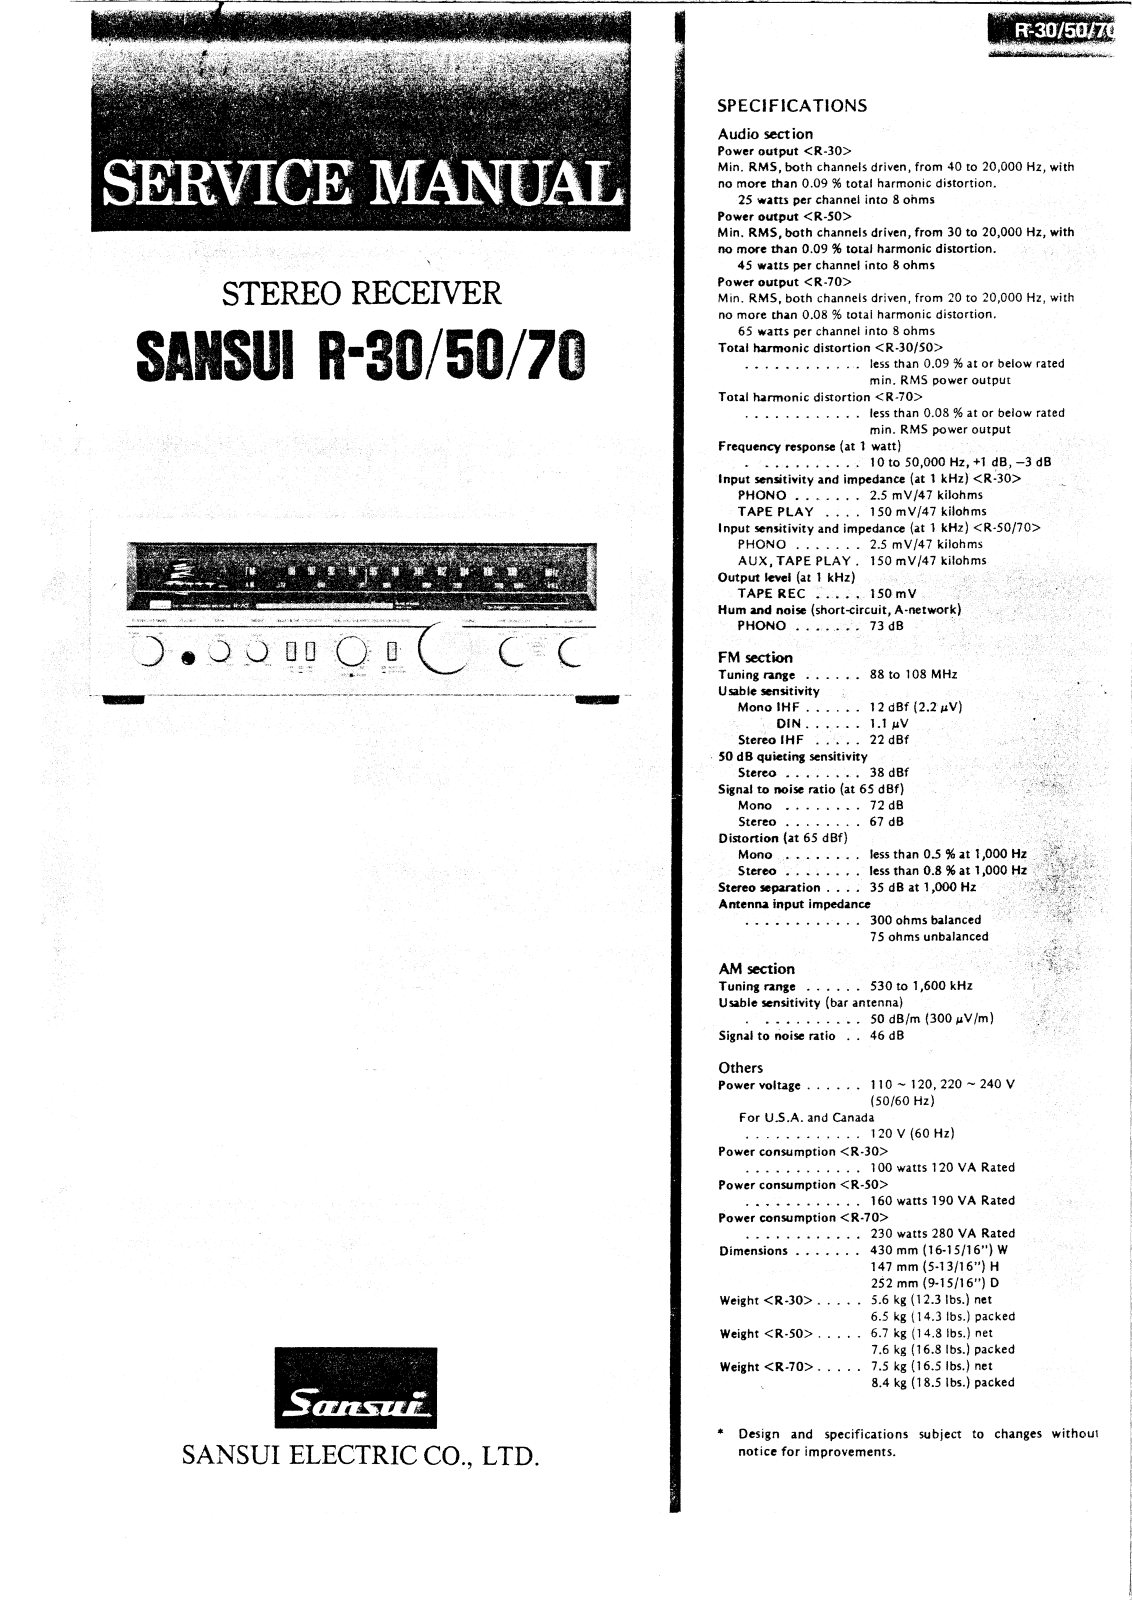 Sansui R-30 Service Manual